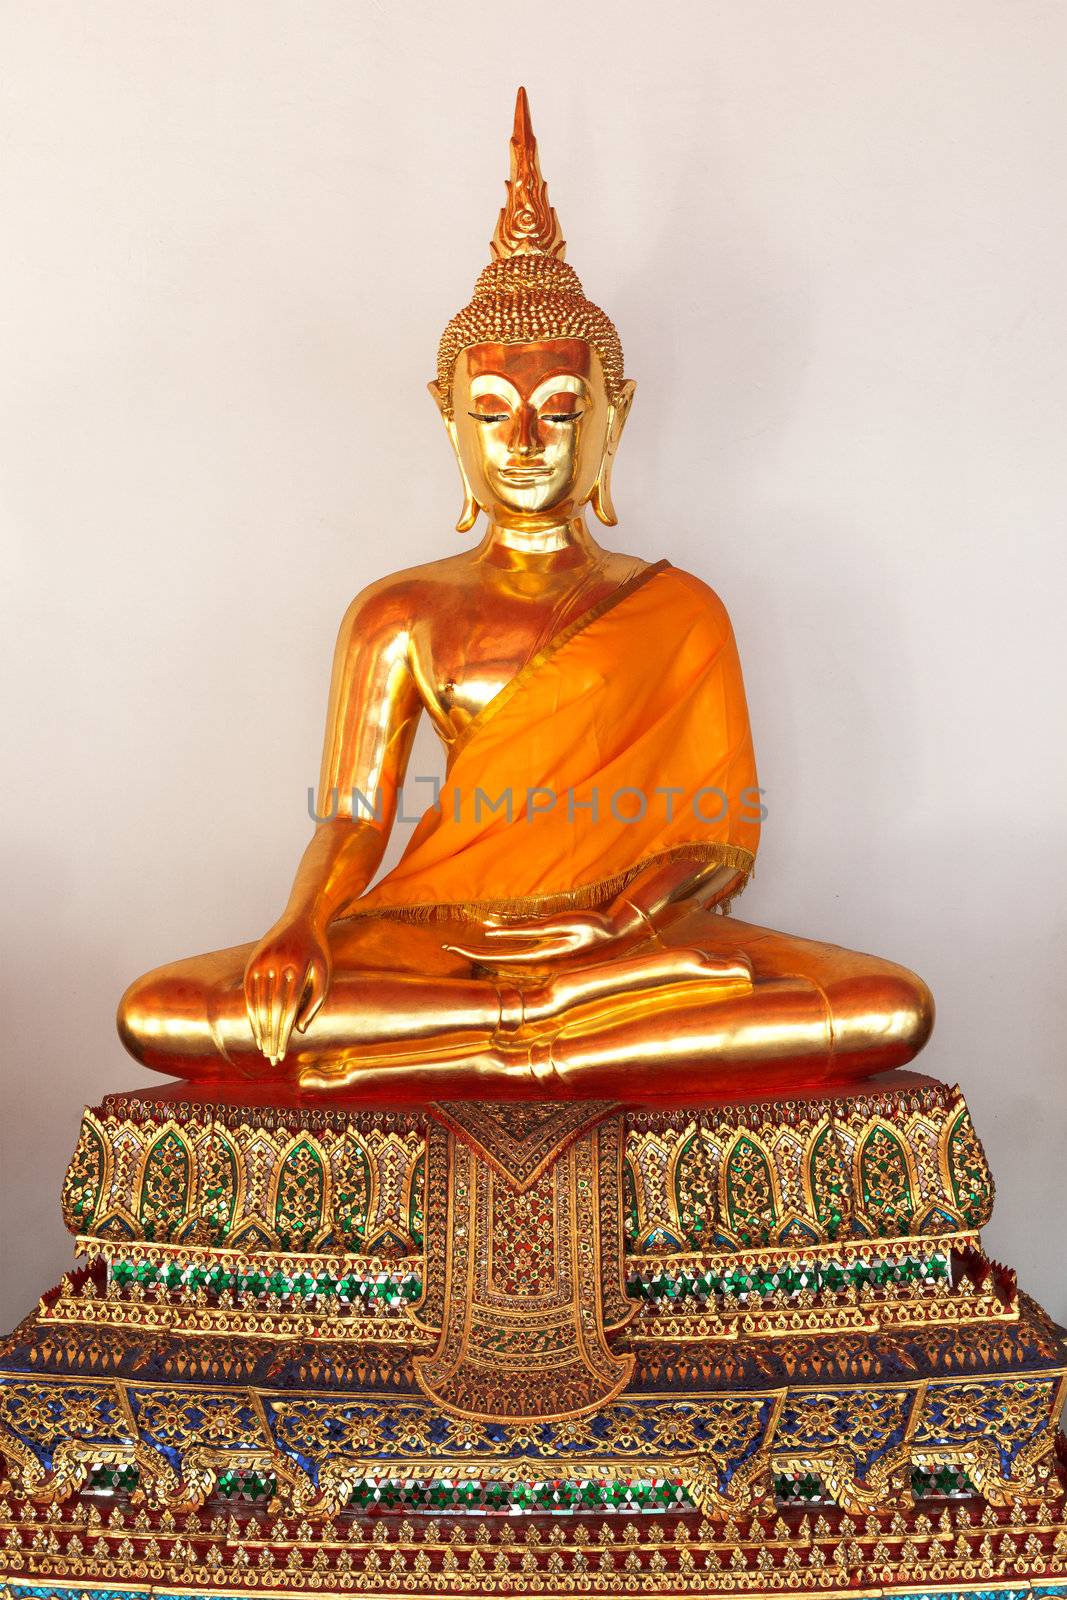 Sitting Buddha Gold Statue close up in Buddhist Temple. Wat Pho, Bangkok, Thailand